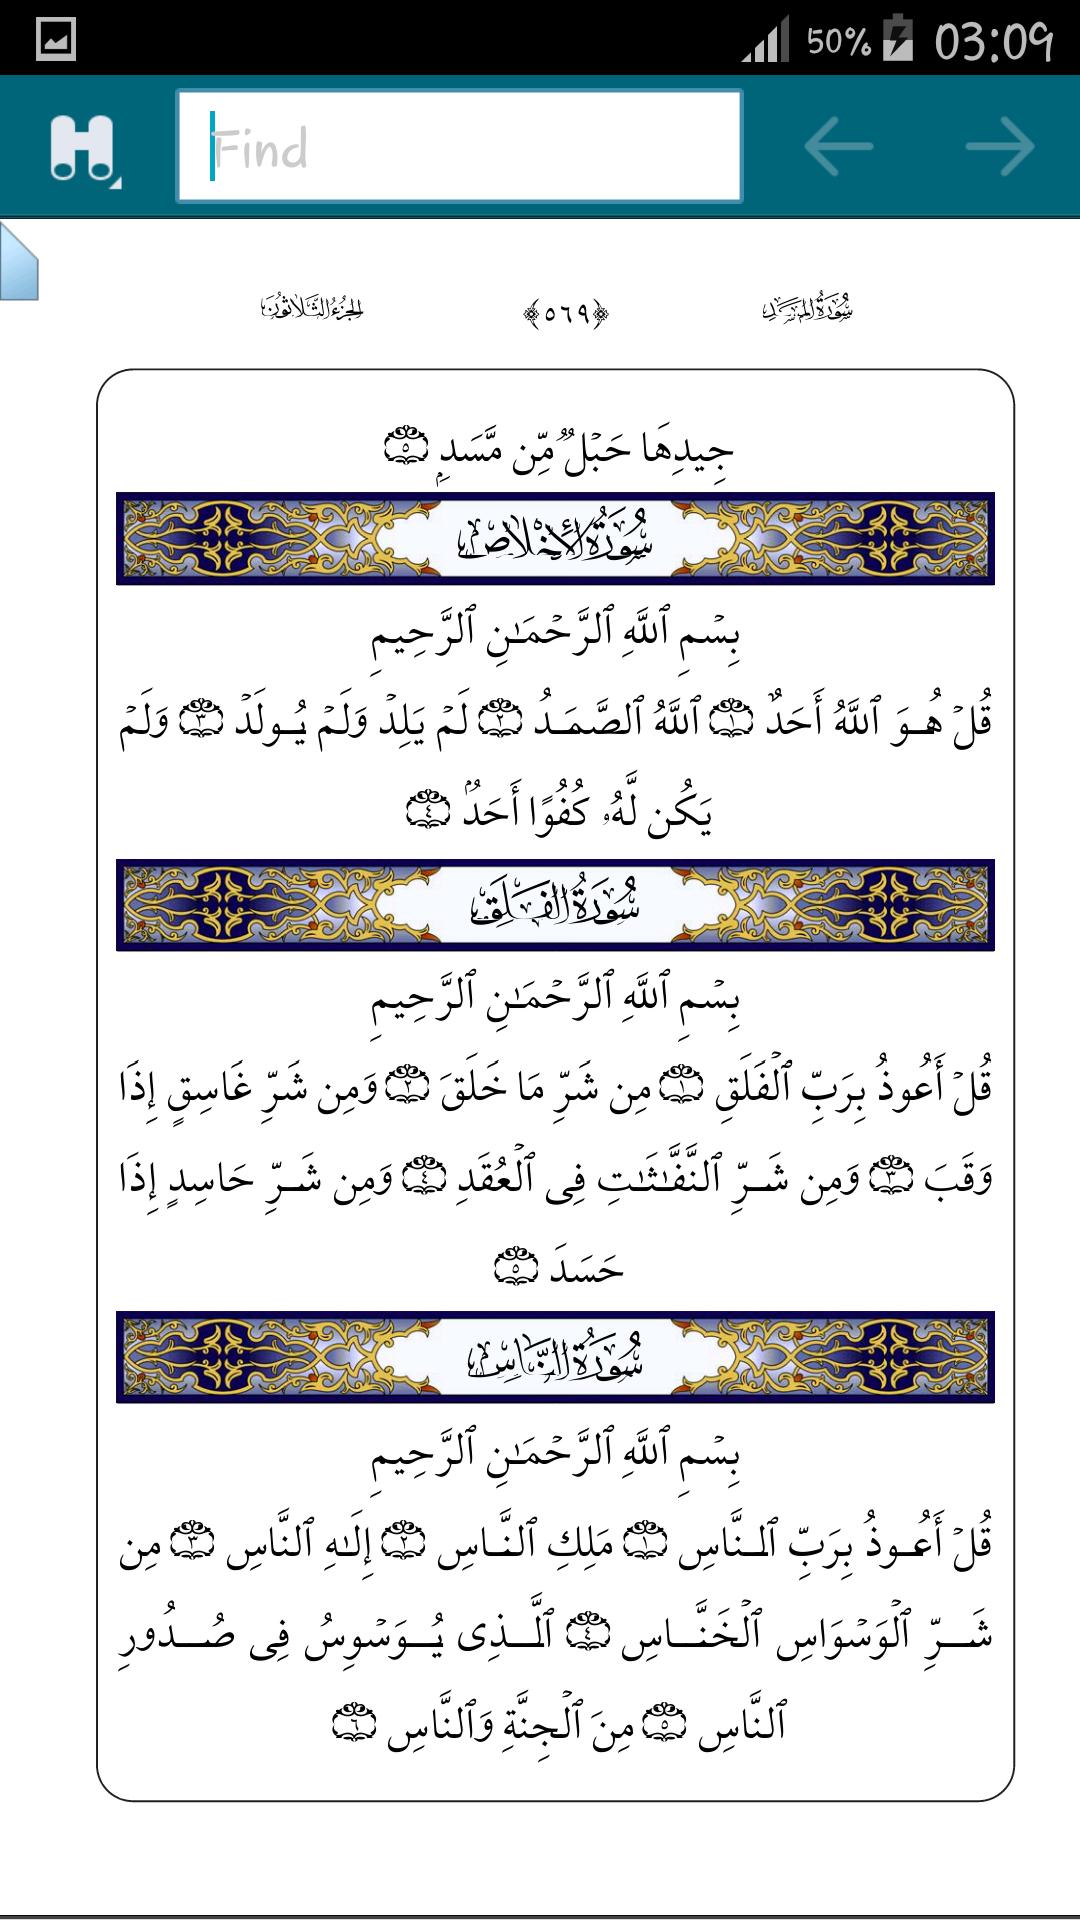 Al-Quran Juz 30 Complete for Android - APK Download